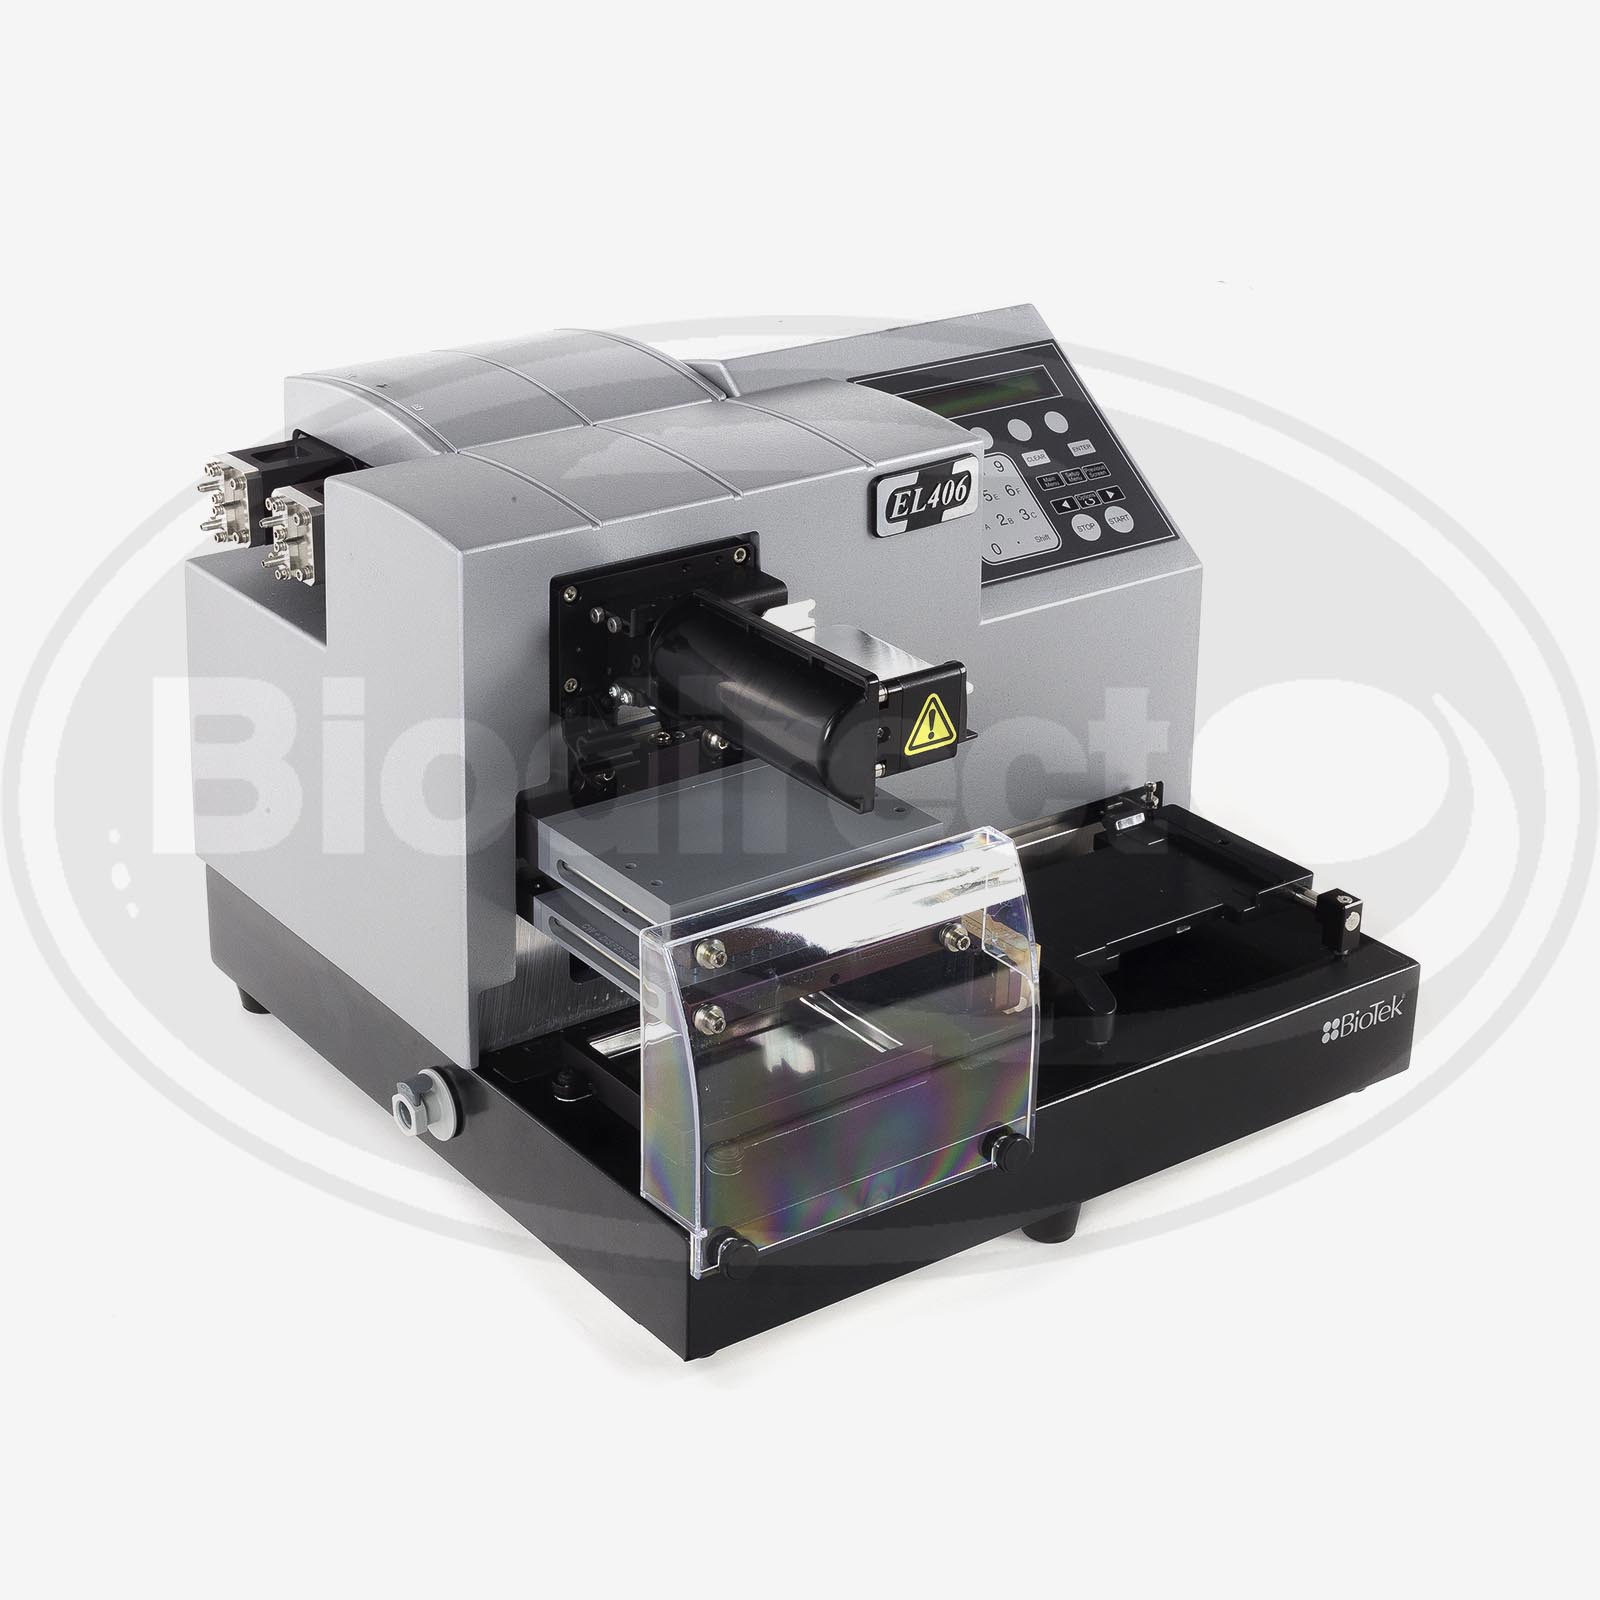 BioTek Instruments Microplate Washer EL406